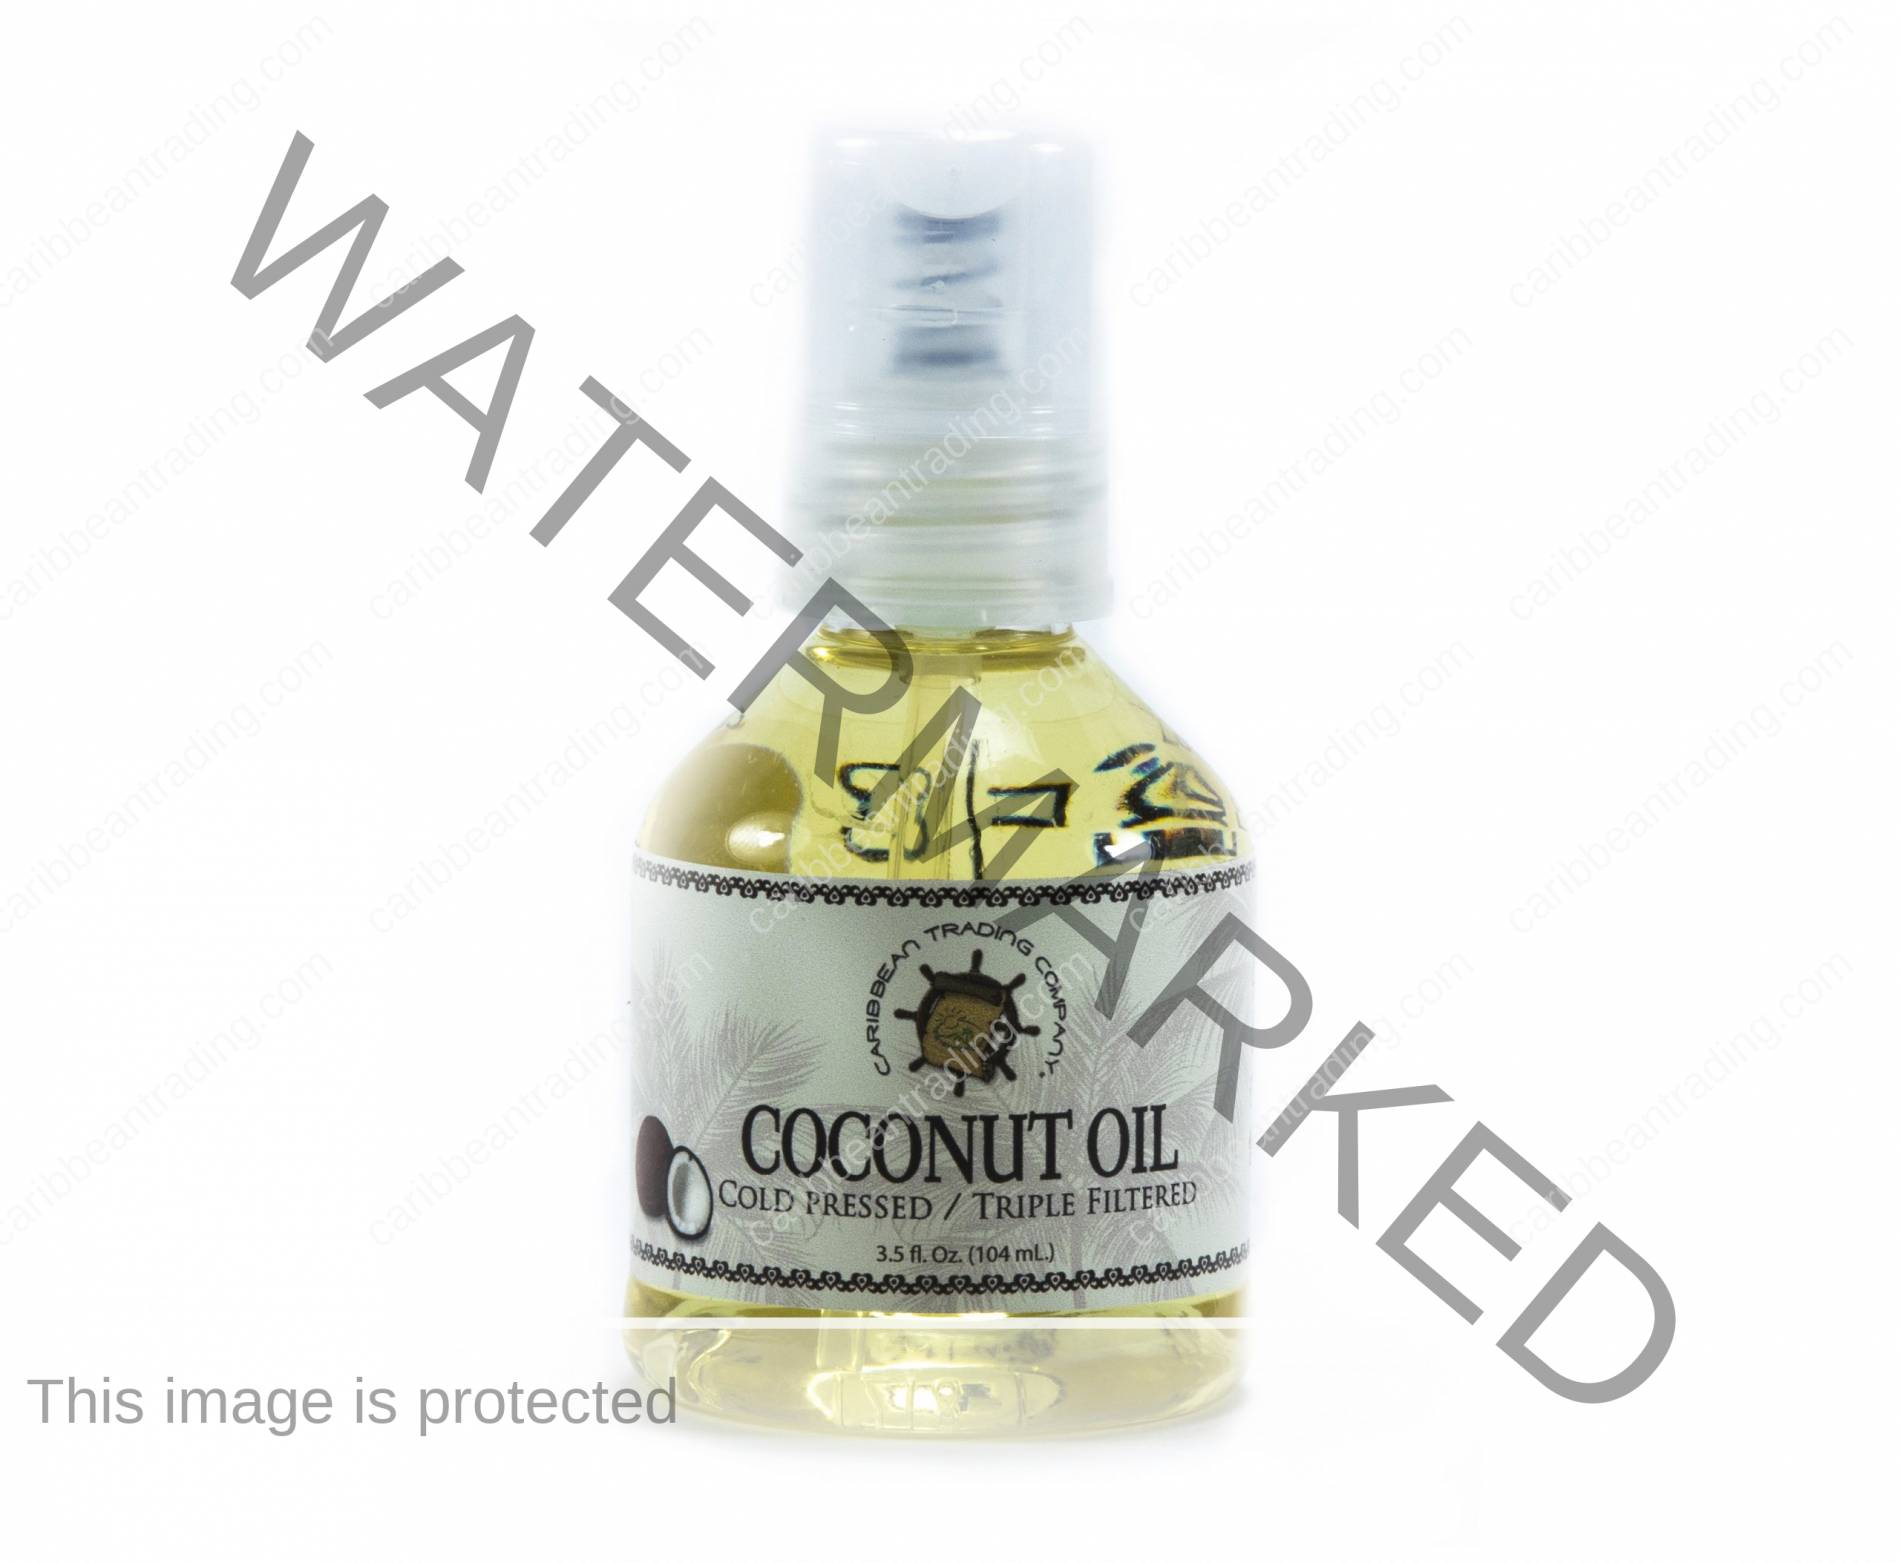 Coconut Oil - Cold Pressed / Triple Filtered - 3.5 oz.